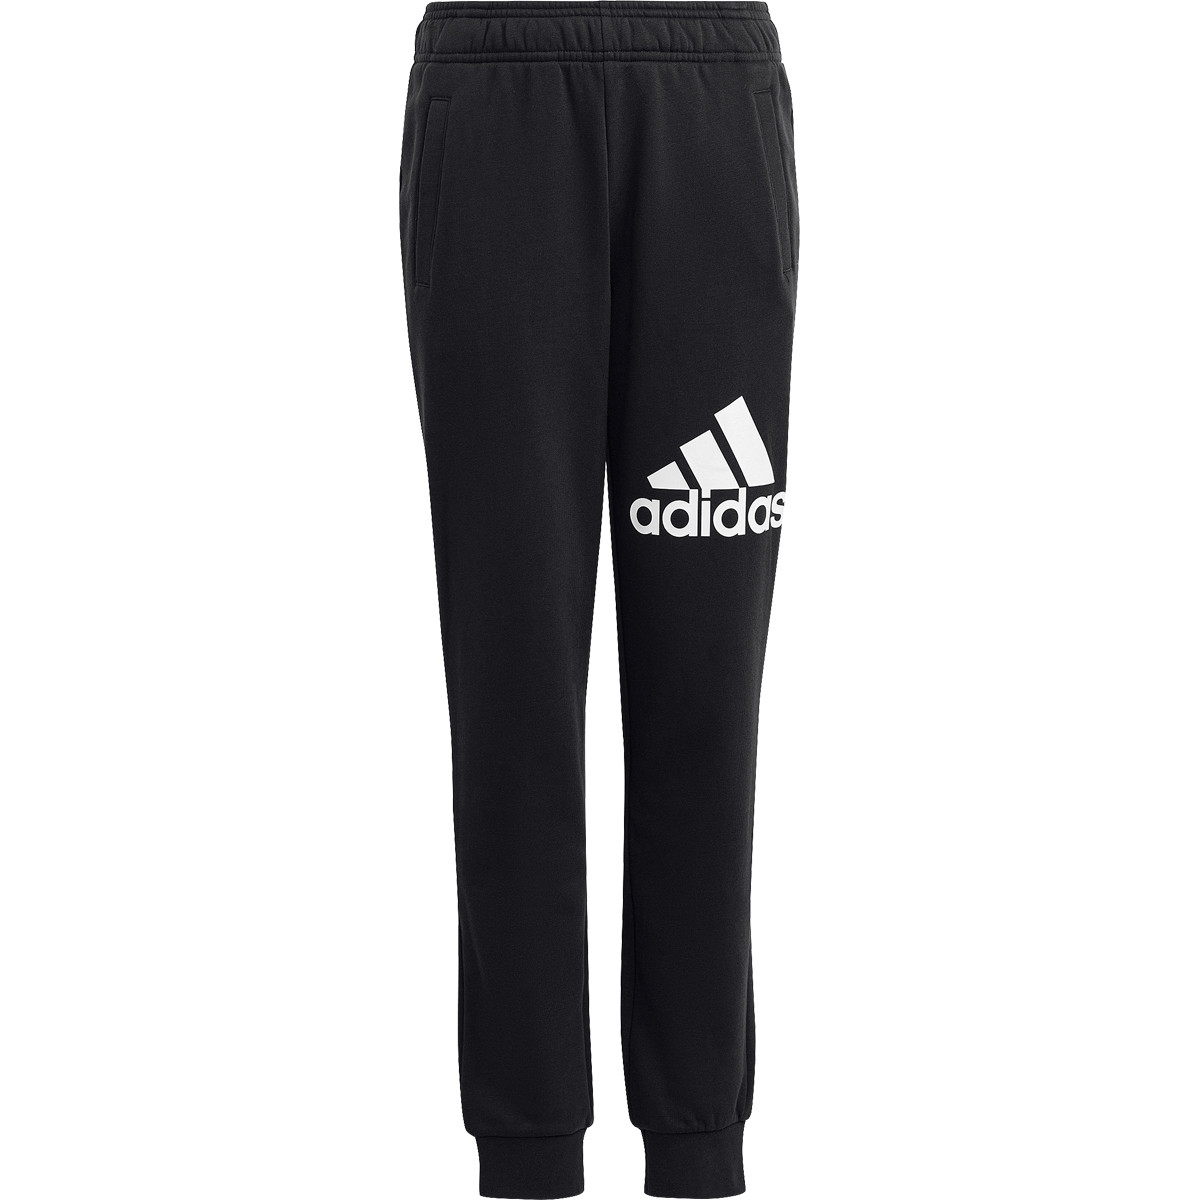 adidas Boys Tricot Track Pants (Black, Small) : Clothing, Shoes & Jewelry -  Amazon.com